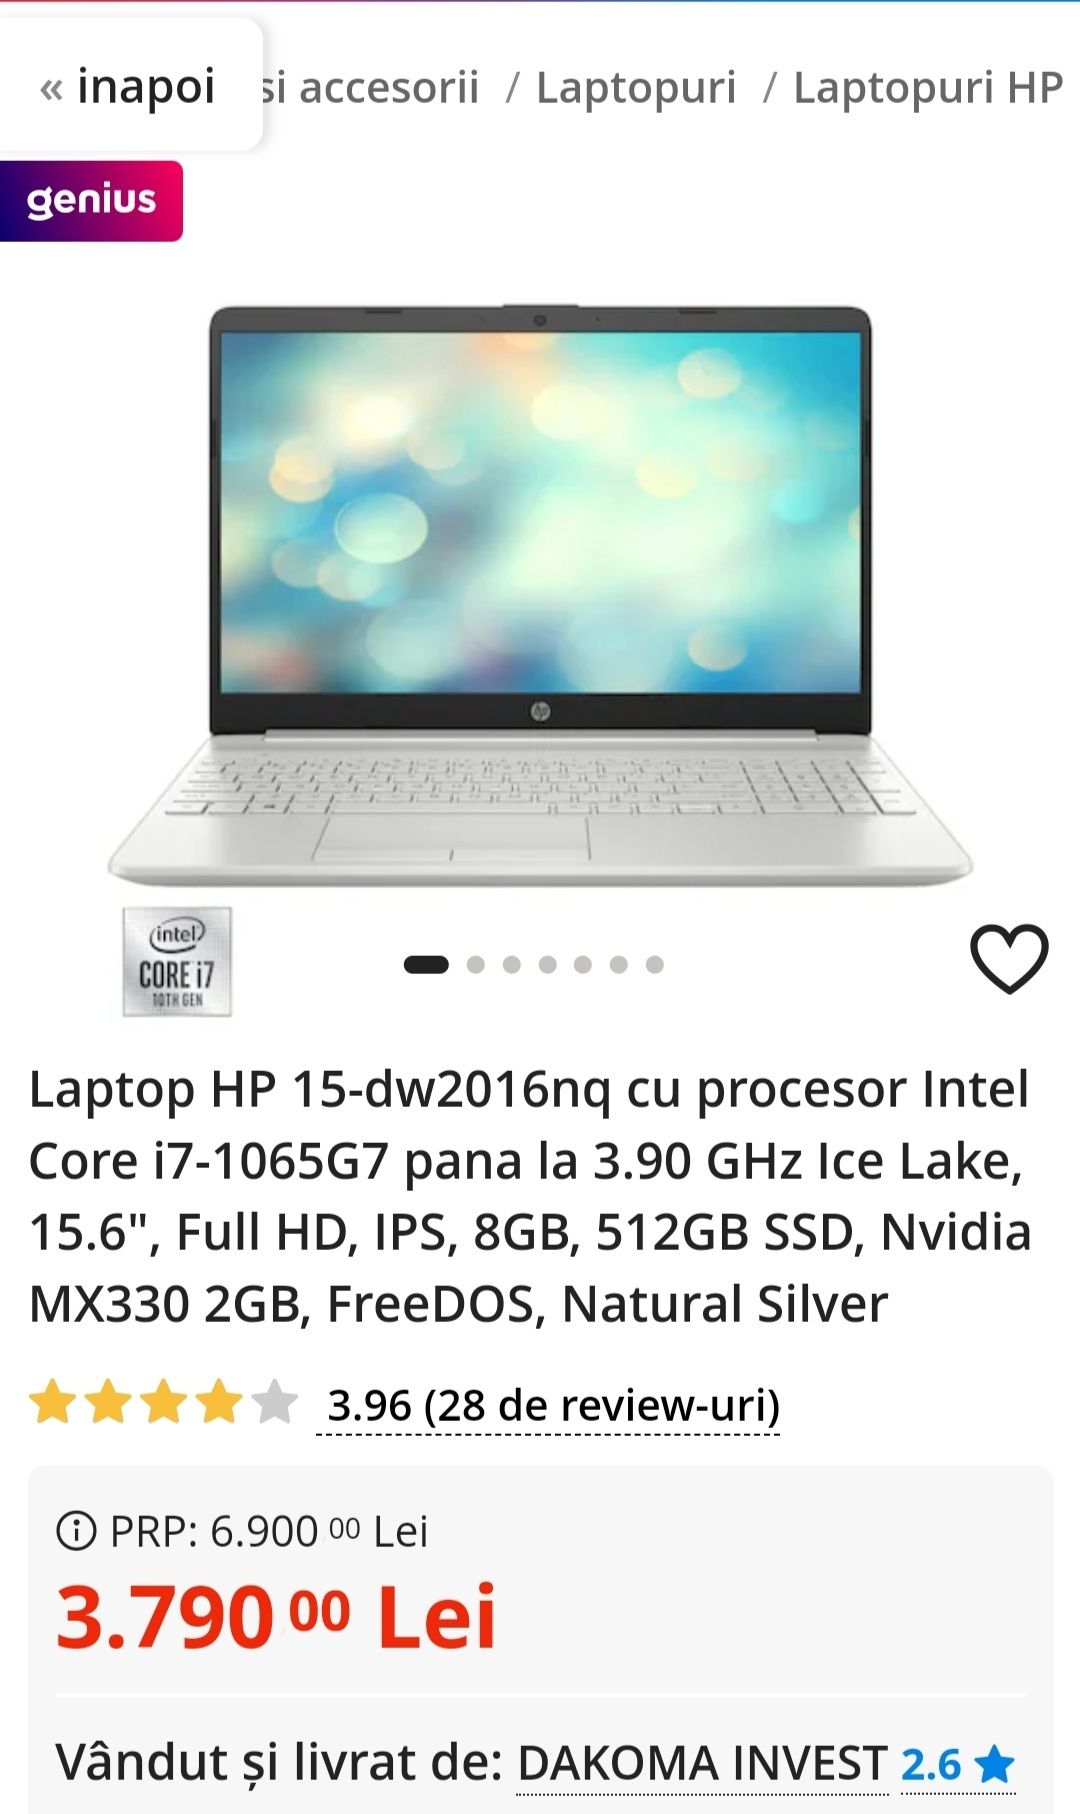 Laptop HP 15-dw2016nq cu procesor Intel Core i7-1065G7 pana la 3.90 GH